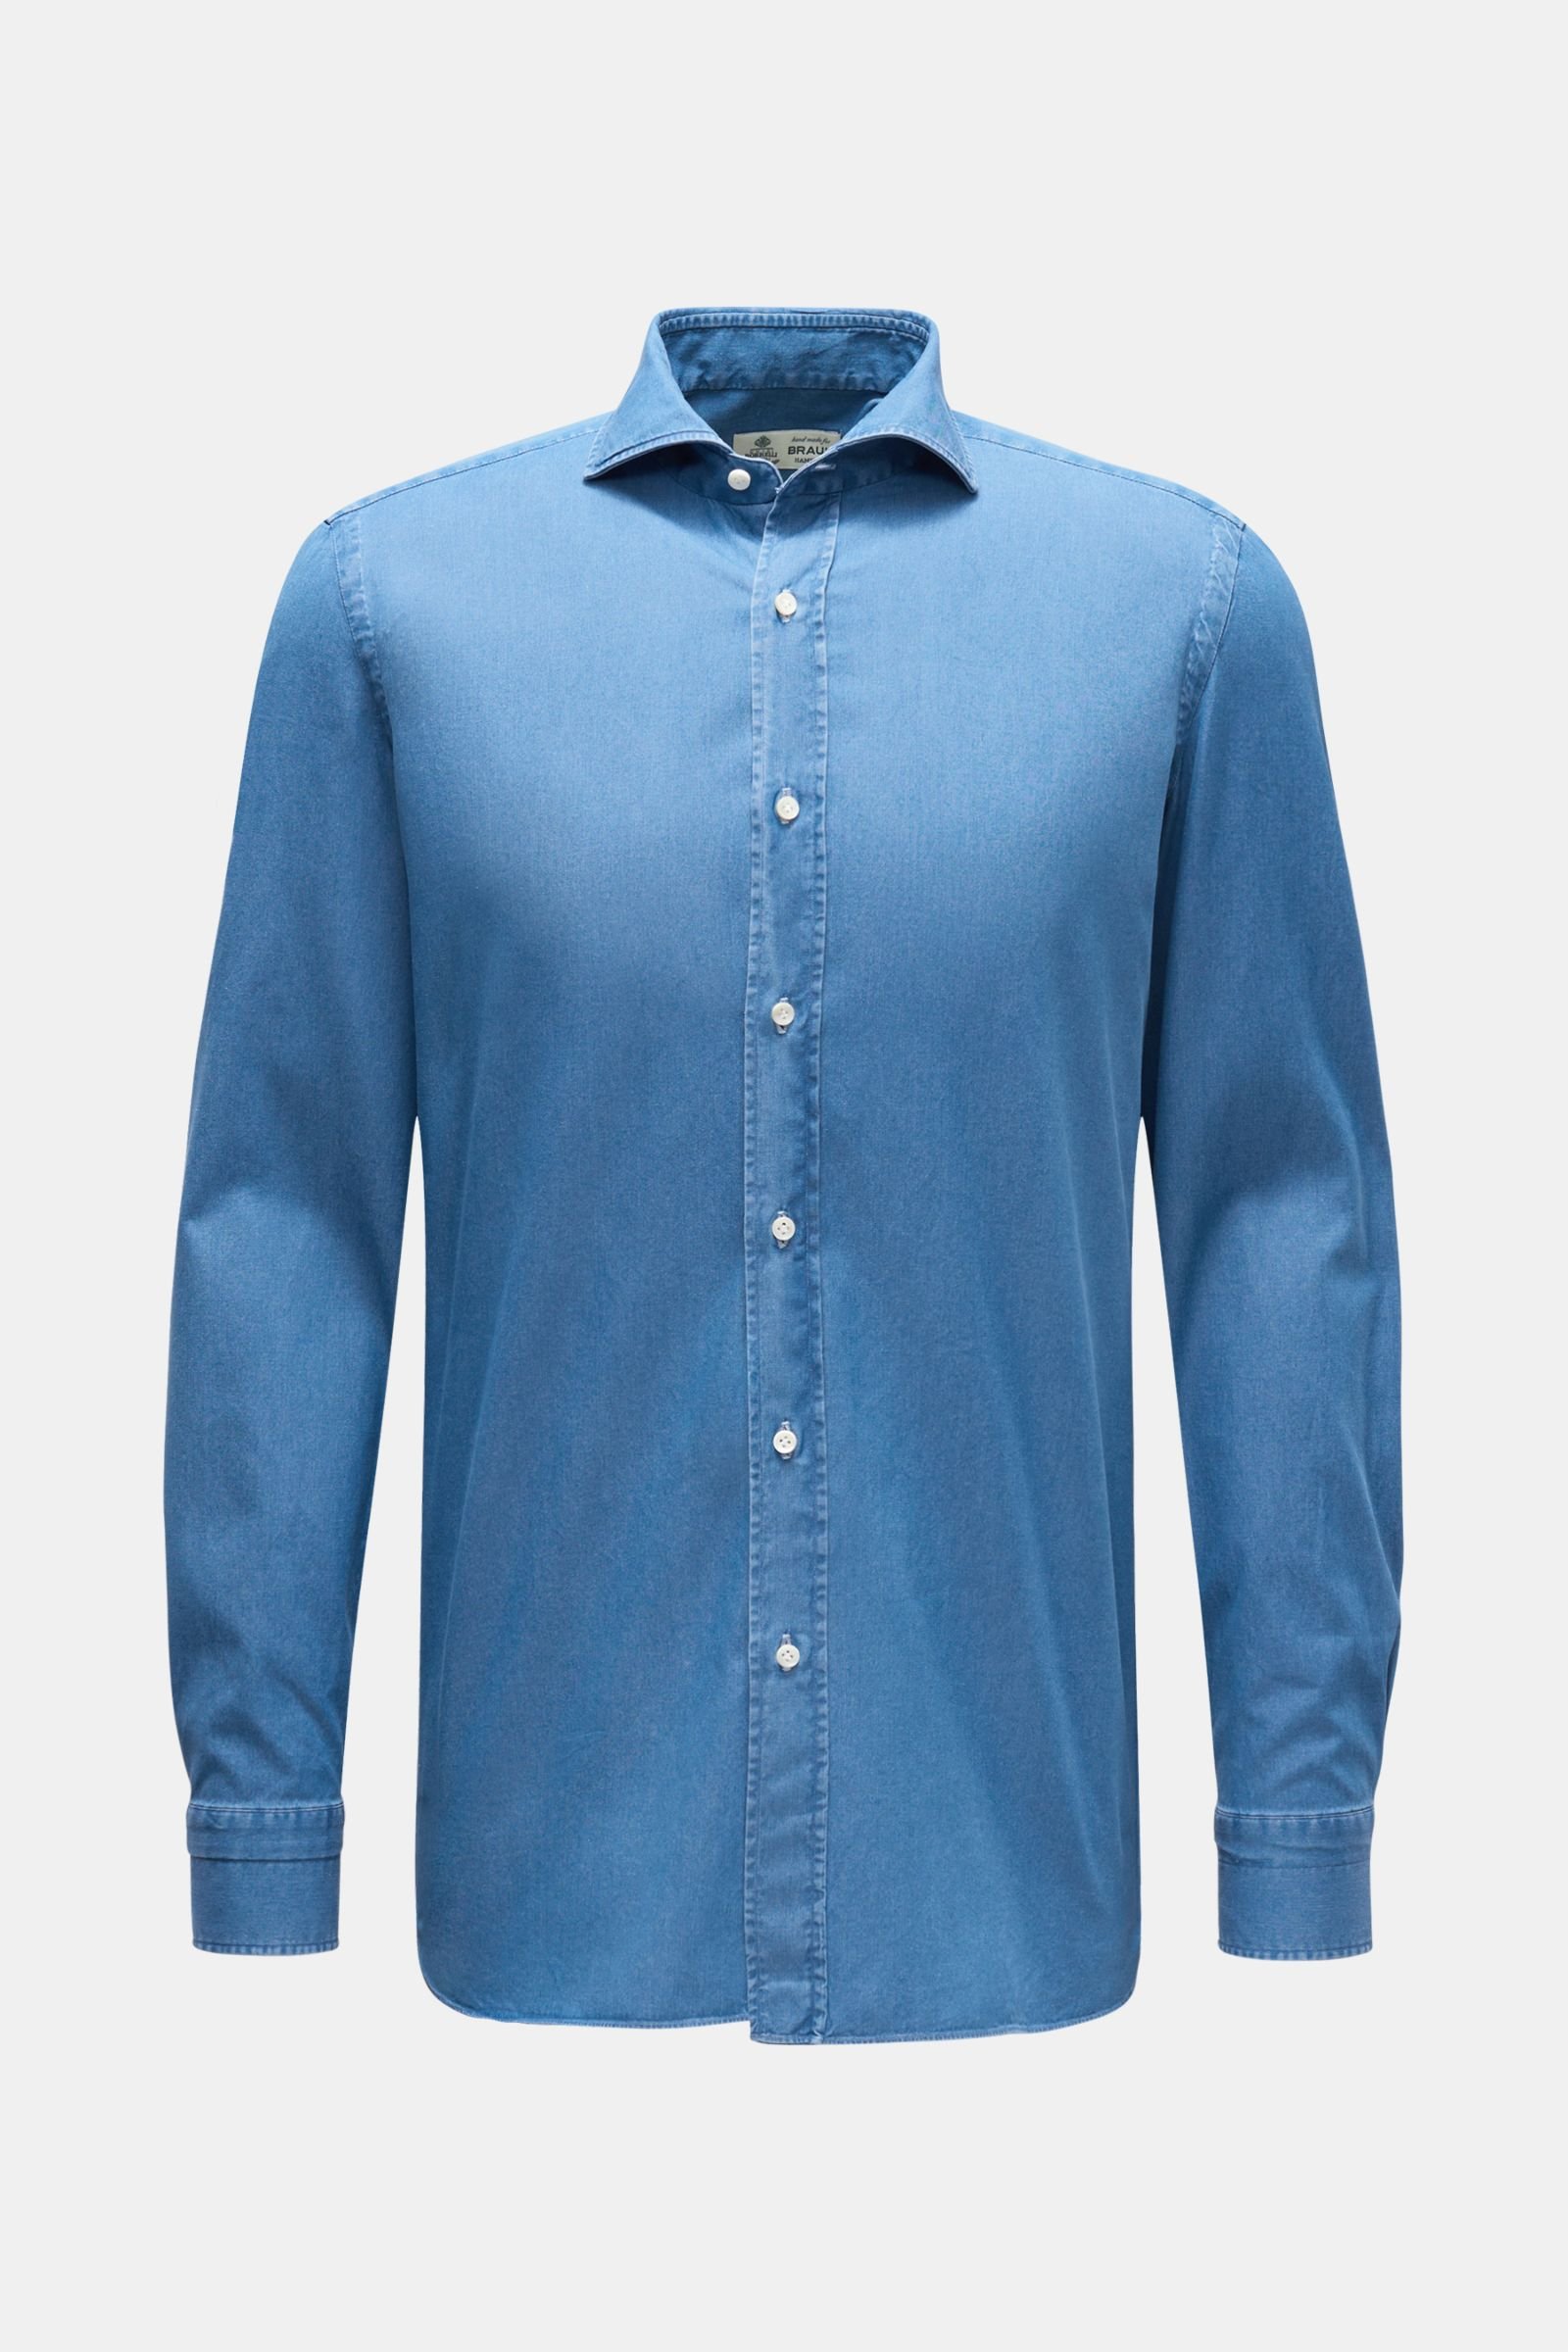 'Nando' denim shirt shark collar smoky blue